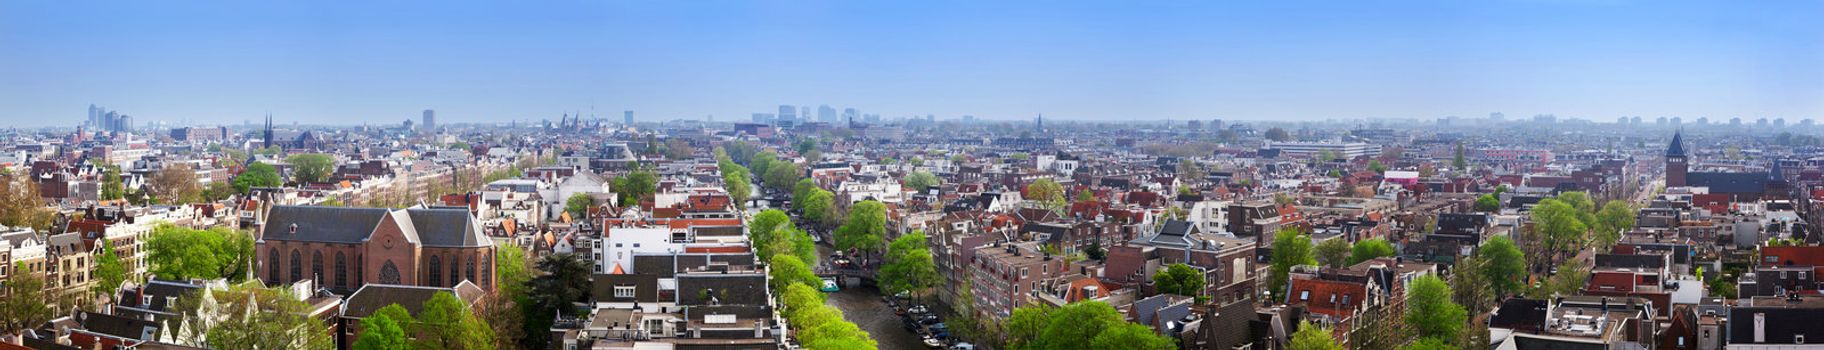 Amsterdam panorama, Holland, Netherlands. City view from Westerkerk